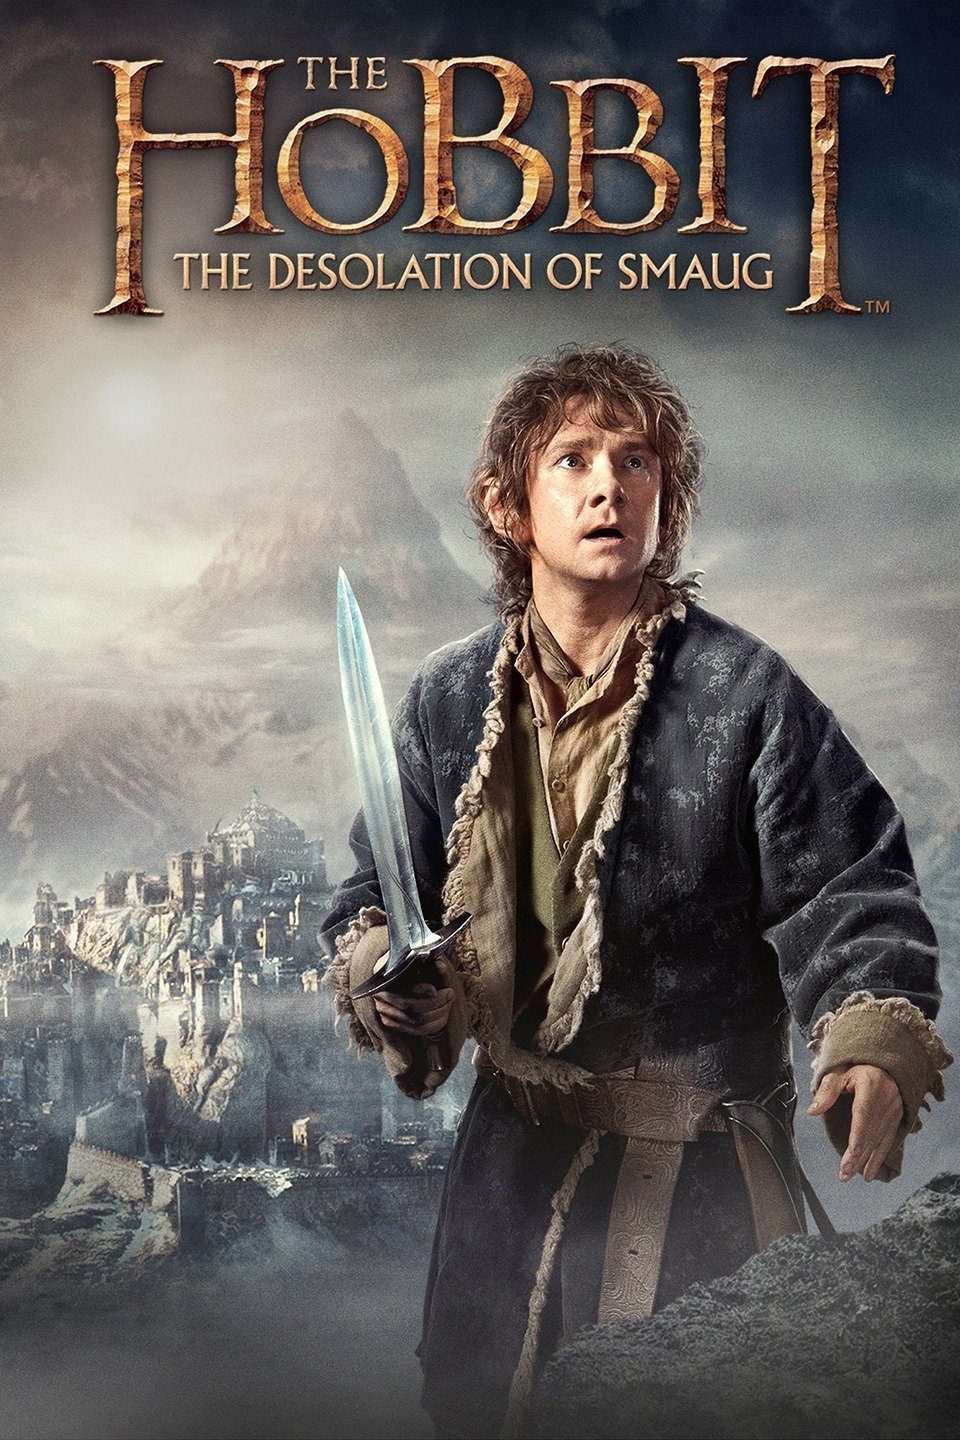 [MINI Super-HQ] The Hobbit: The Desolation of Smaug (2013) เดอะ ฮอบบิท 2: ดินแดนเปลี่ยวร้างของสม็อค [Extended Edition] [1080p] [พากย์ไทย 5.1 + เสียงอังกฤษ DTS] [บรรยายไทย + อังกฤษ] [ซับไทย + อังกฤษ] [PANDAFILE]